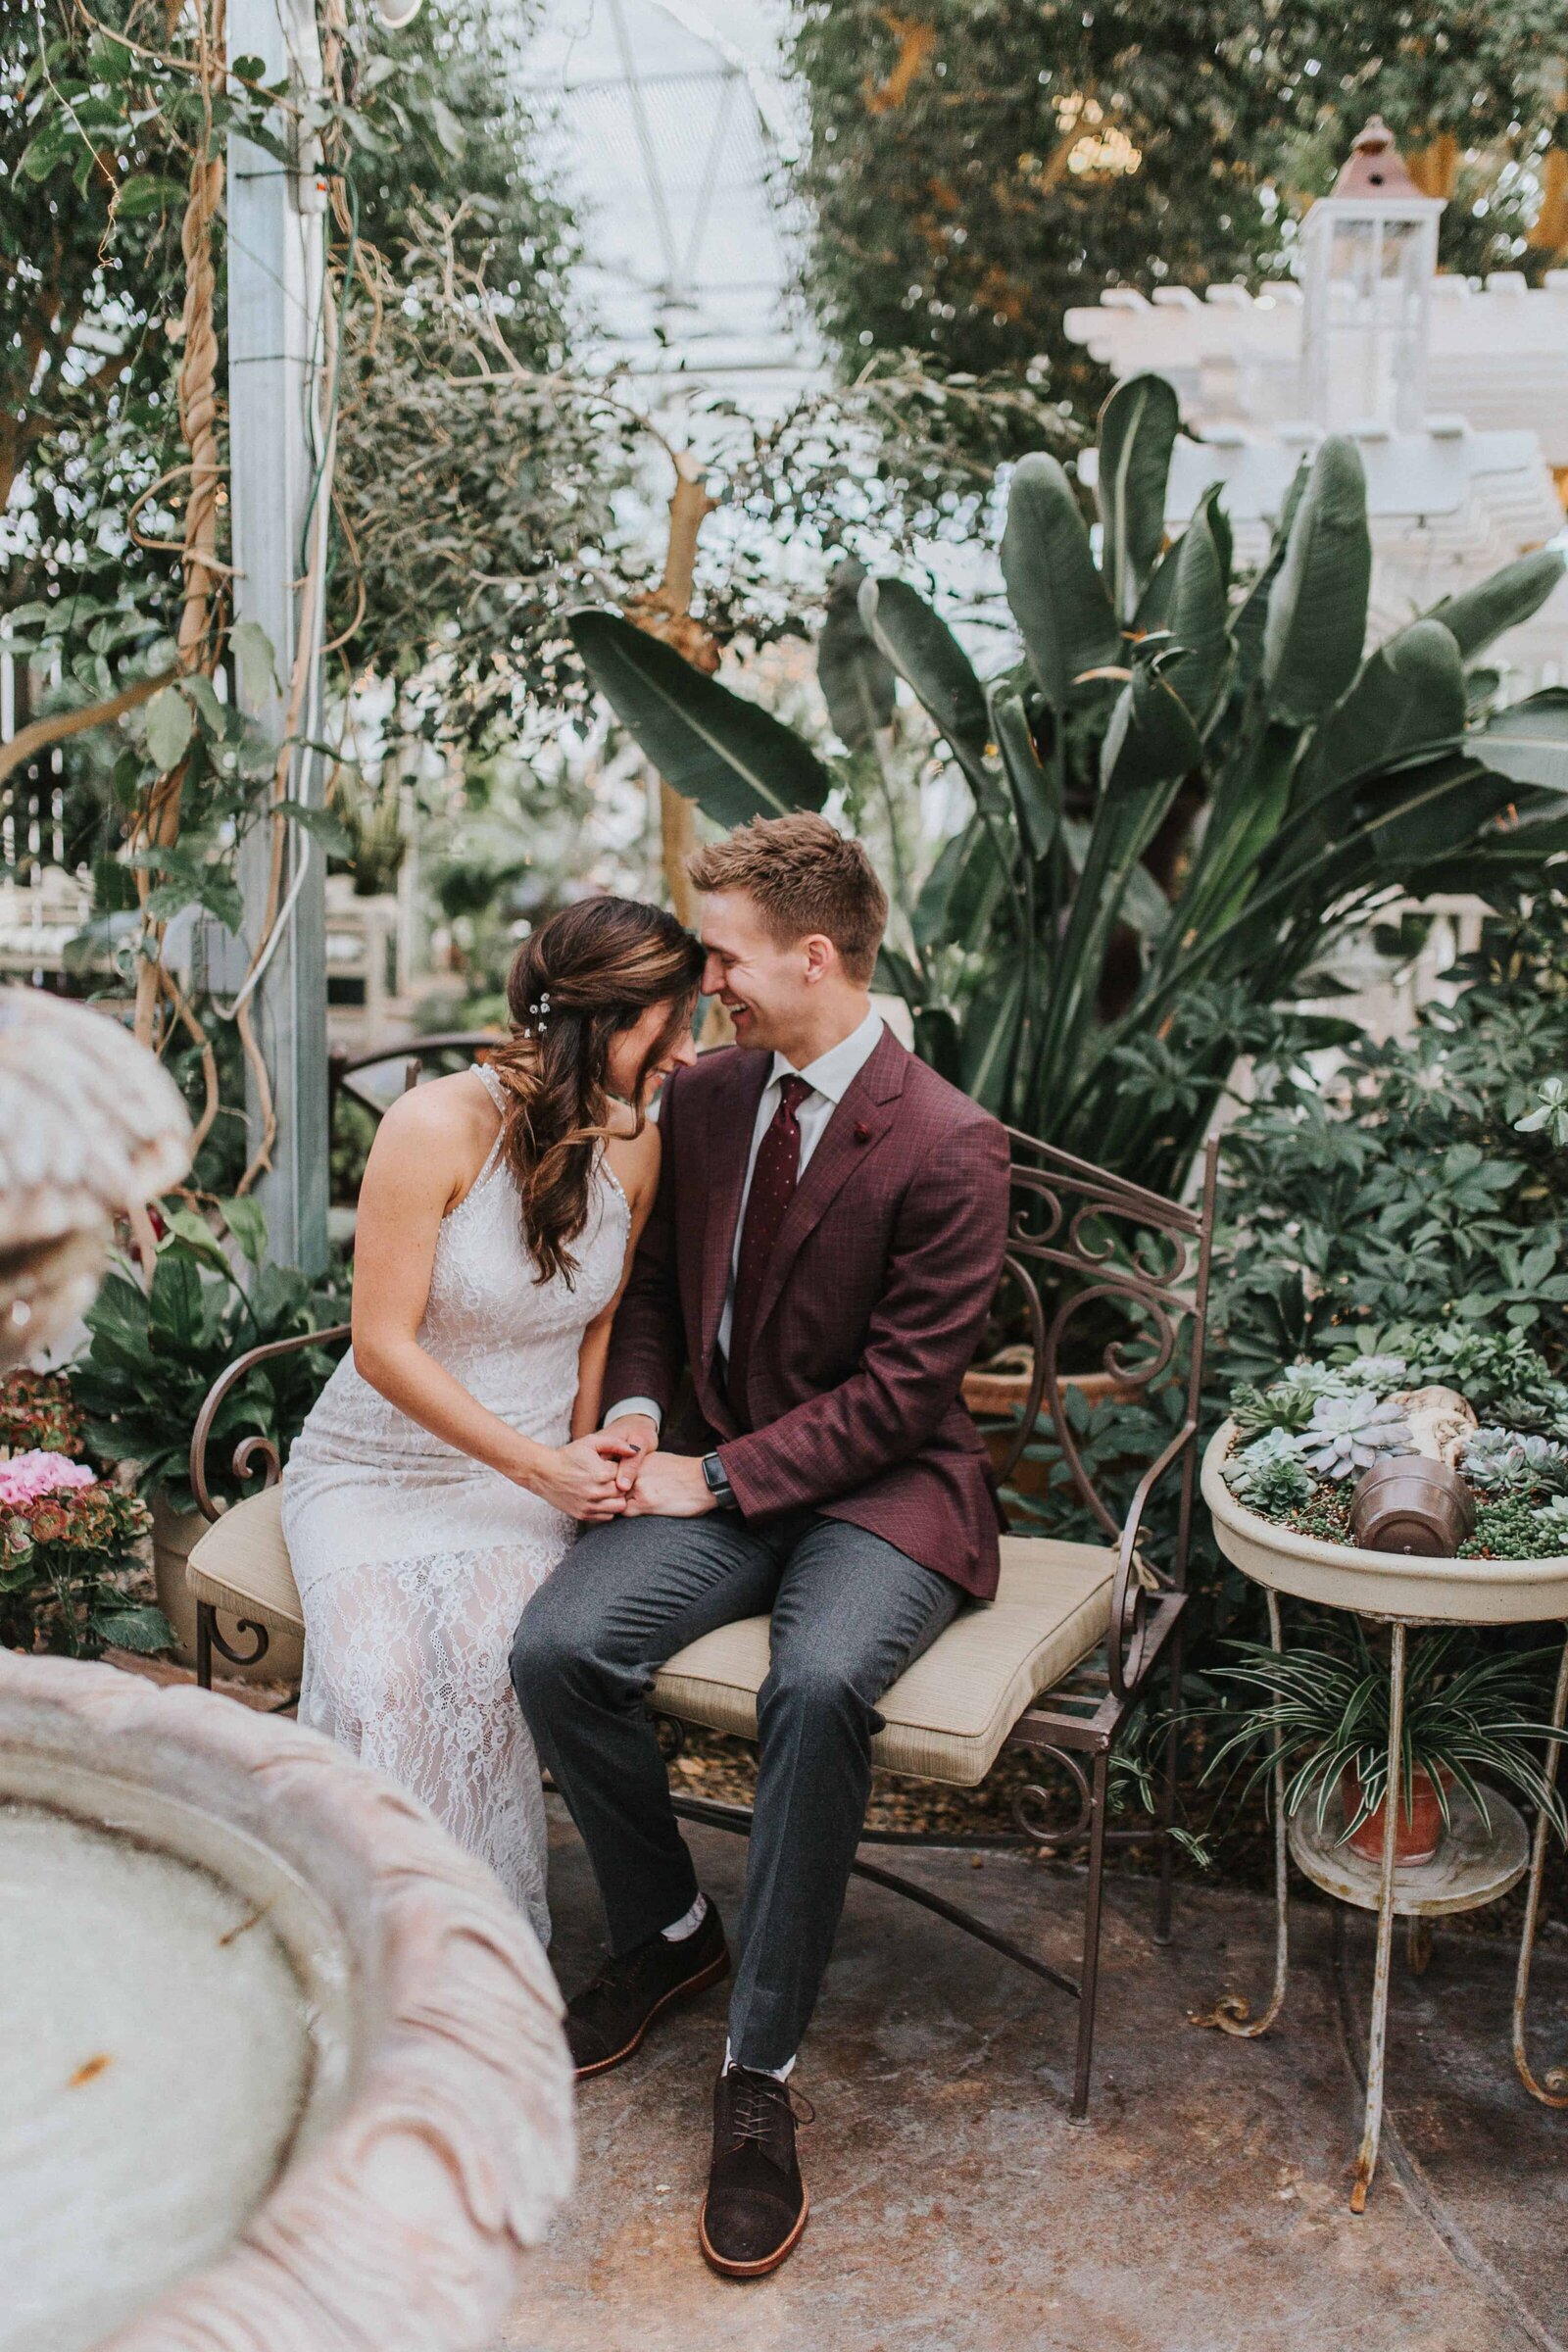 Sacramento Wedding Photographer captures bride and groom laughing together inside greenhouse